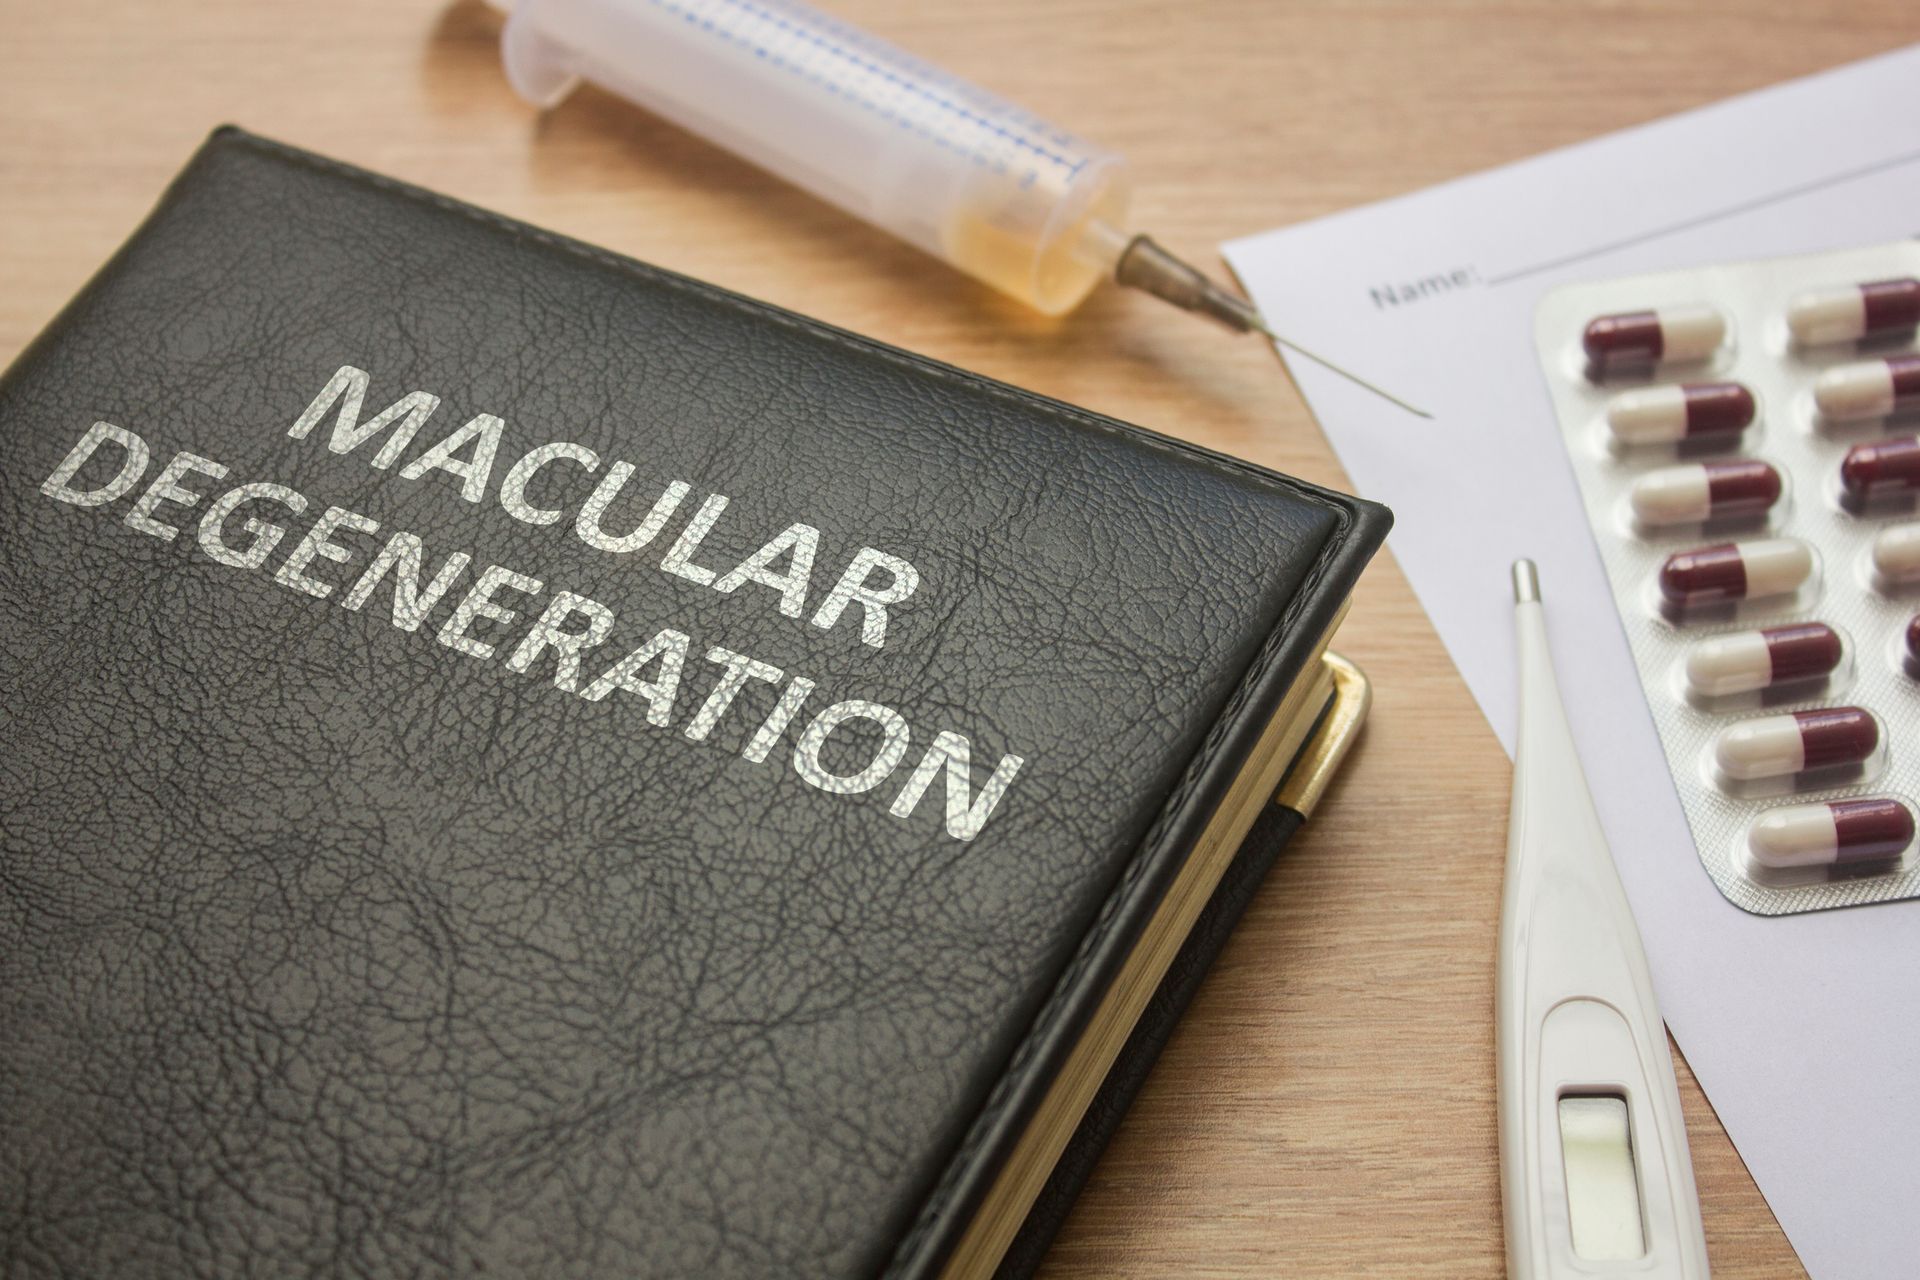 Macular Degeneration Treatment